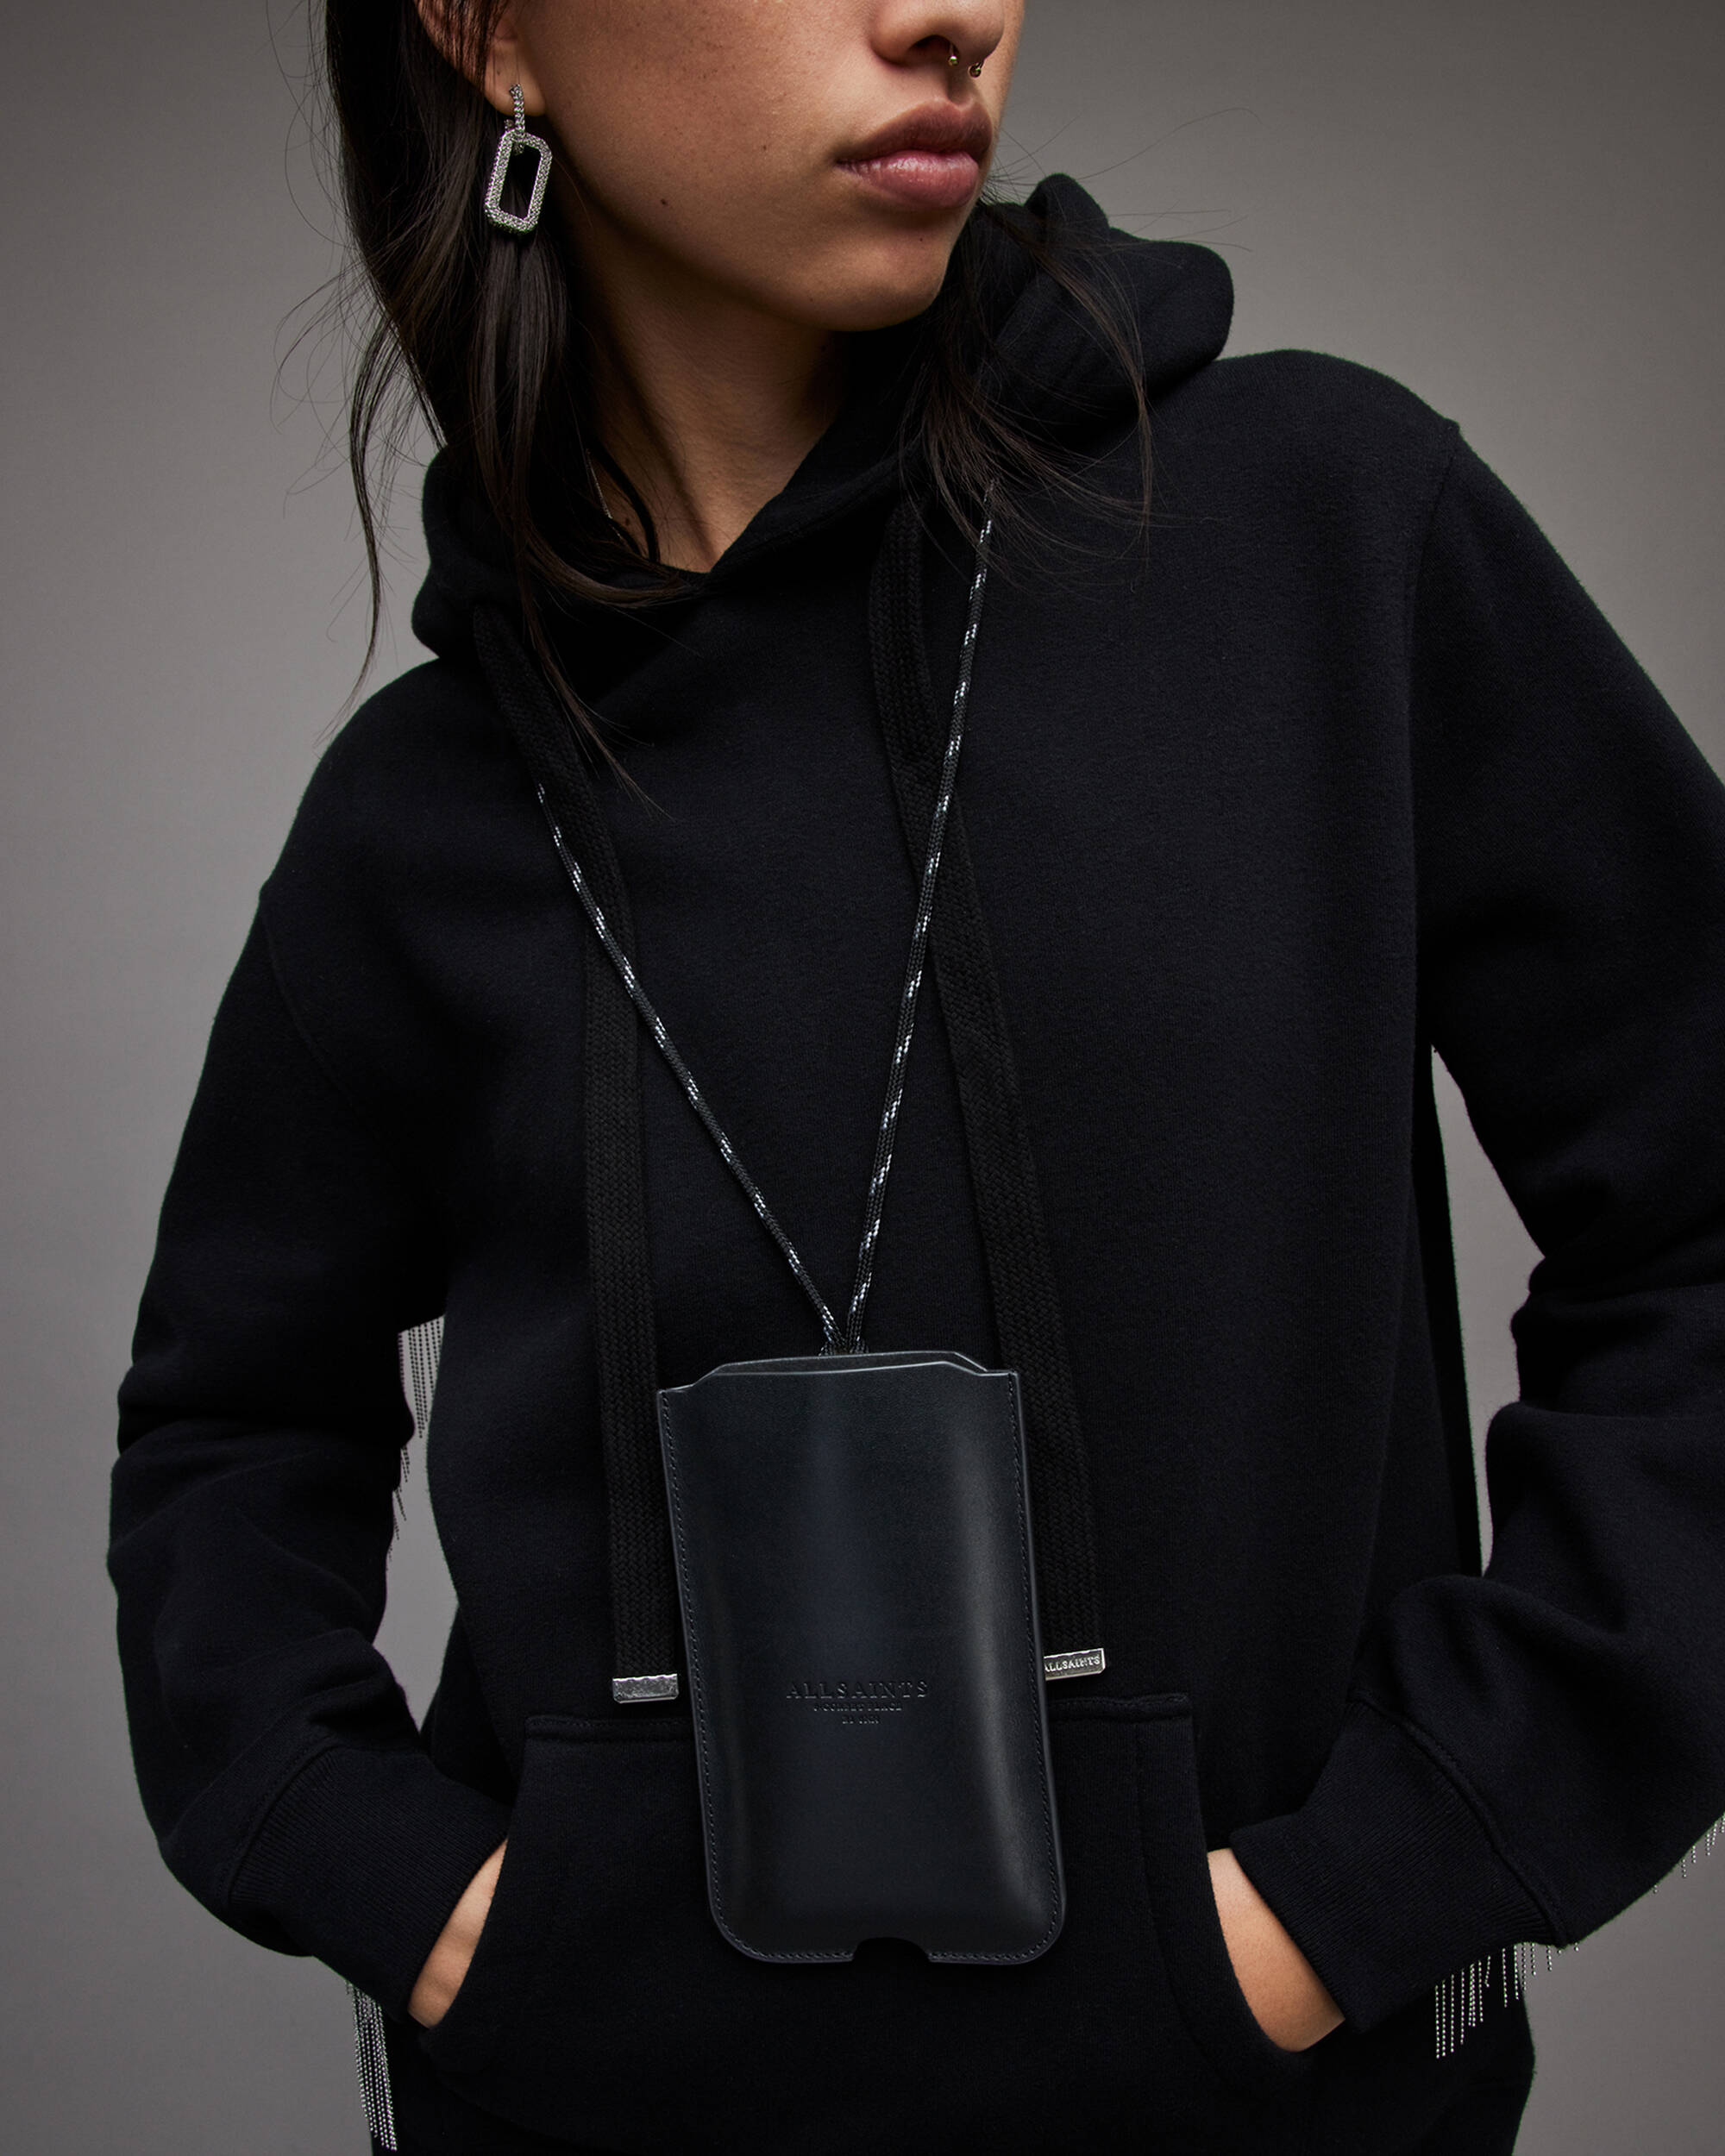 Cybele Leather Phone Holder Black | ALLSAINTS